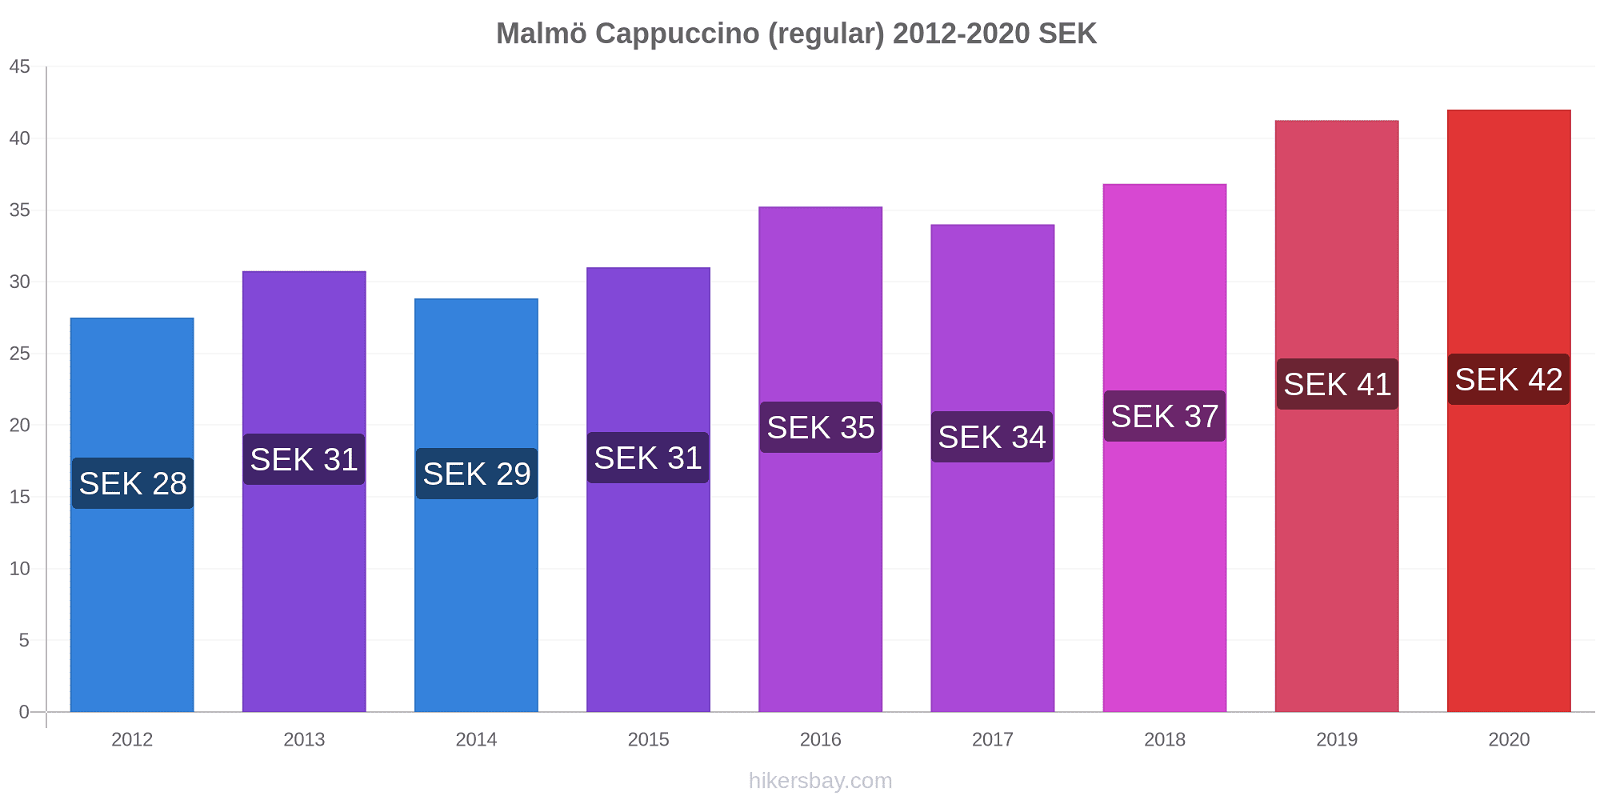 Malmö price changes Cappuccino (regular) hikersbay.com